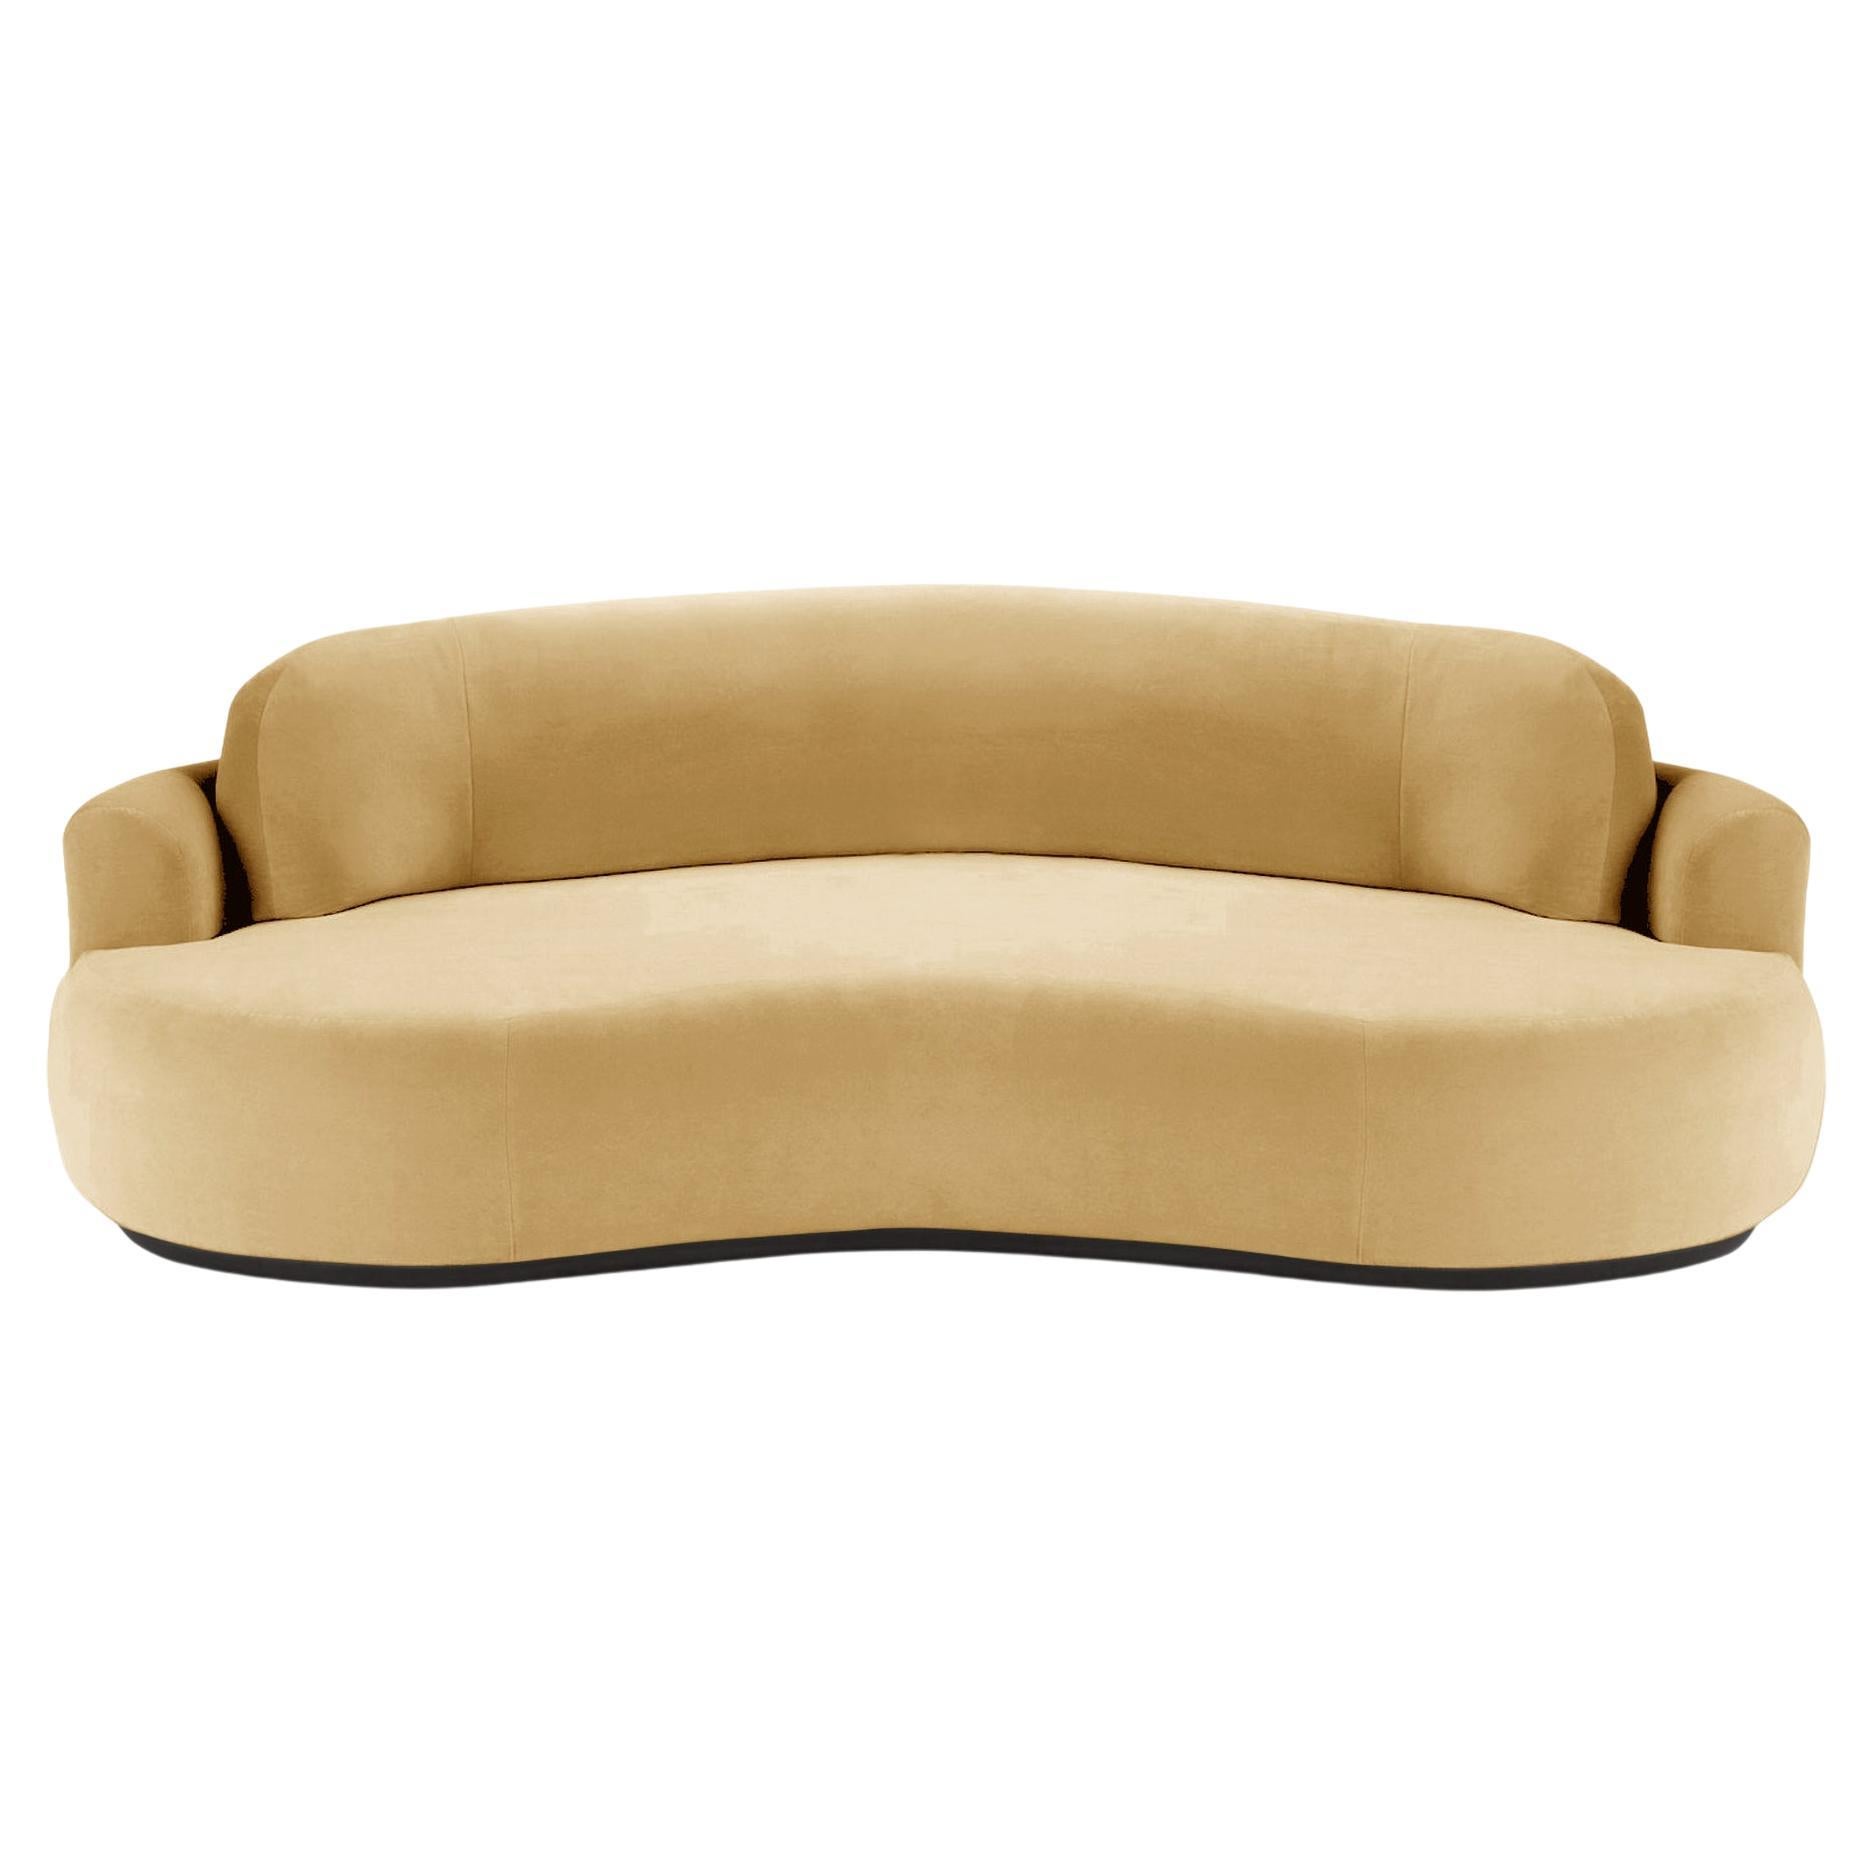 Naked Round Sofa, Medium with Beech Ash-056-5 and Vigo Plantain For Sale